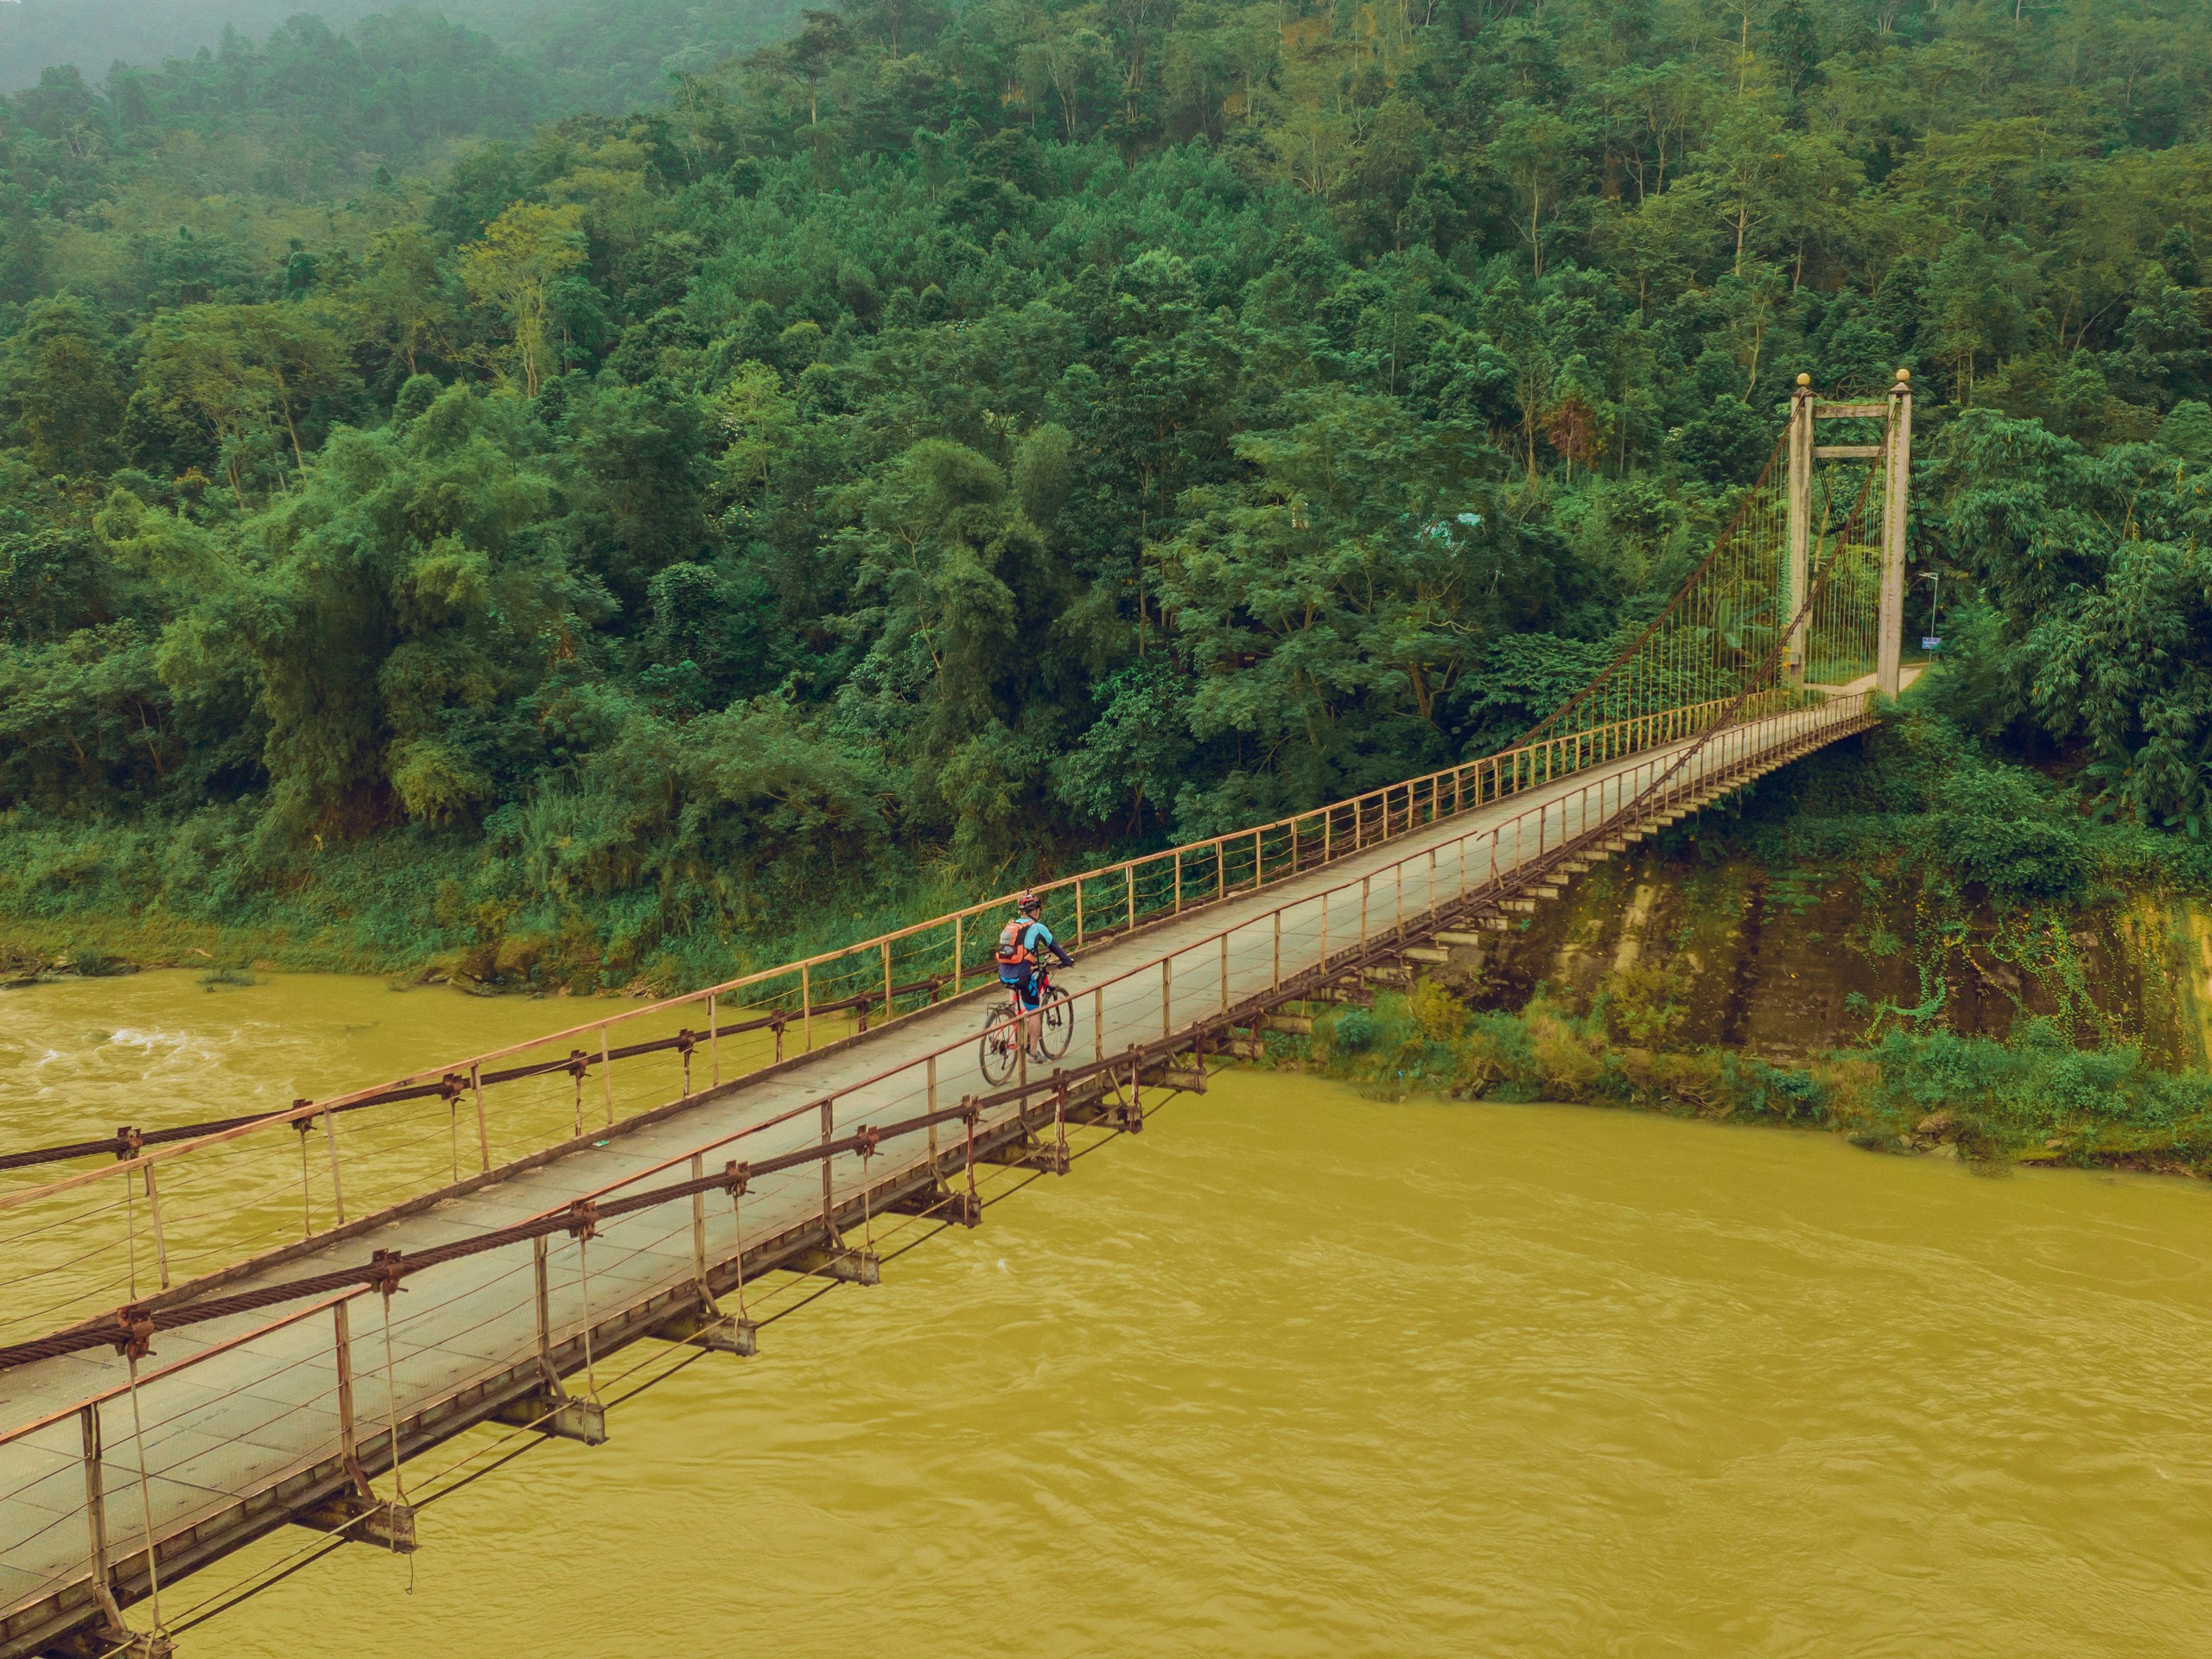 Crossing the river in Vietnam